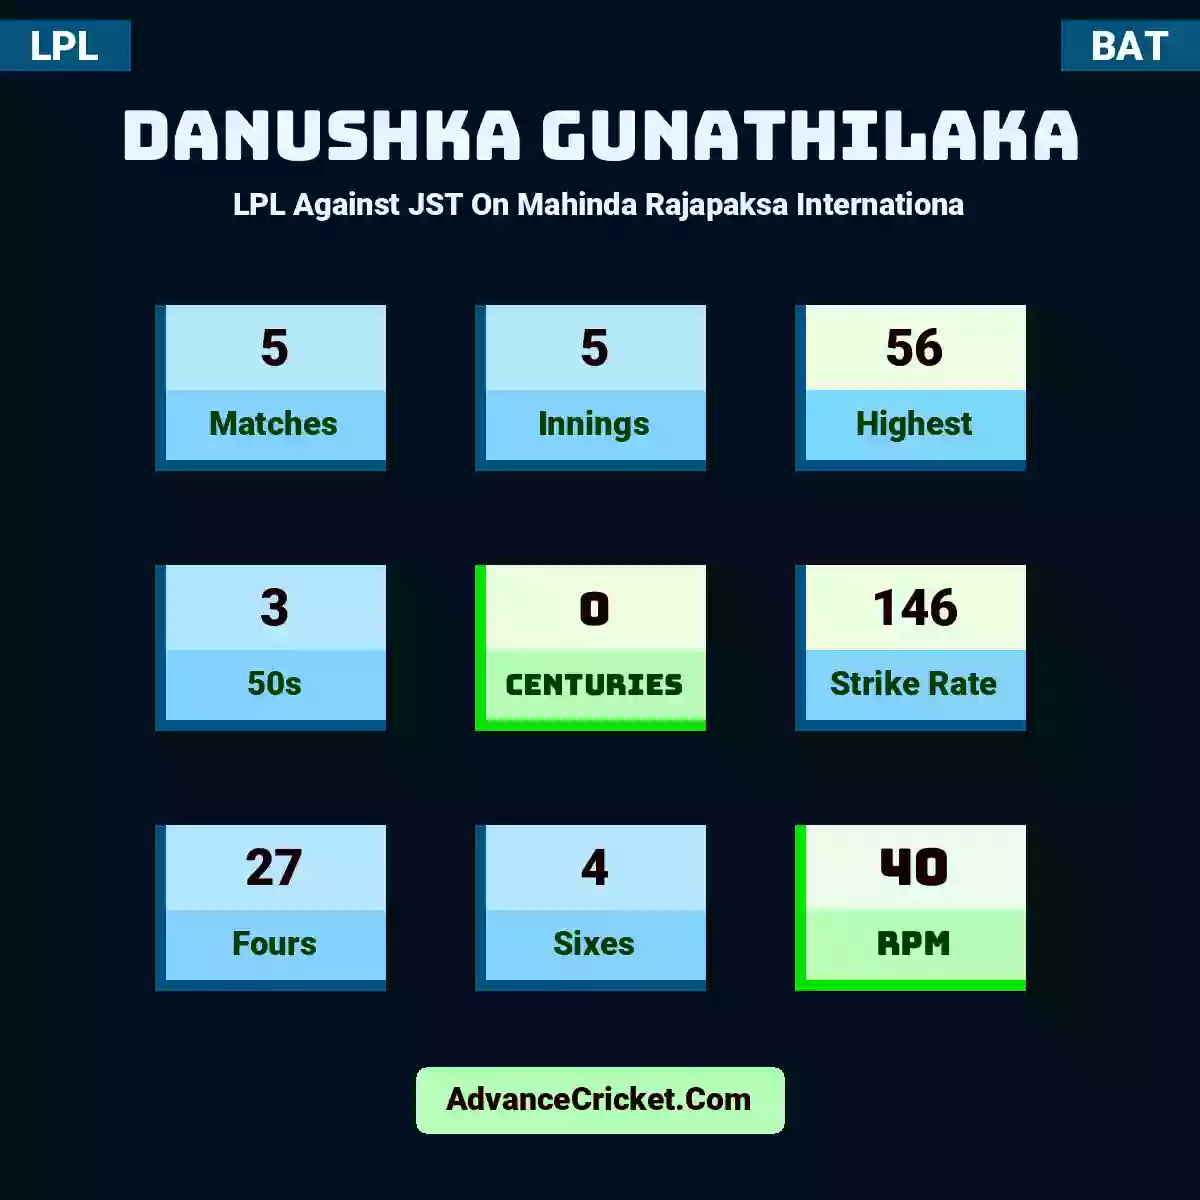 Danushka Gunathilaka LPL  Against JST On Mahinda Rajapaksa Internationa, Danushka Gunathilaka played 5 matches, scored 56 runs as highest, 3 half-centuries, and 0 centuries, with a strike rate of 146. D.Gunathilaka hit 27 fours and 4 sixes, with an RPM of 40.